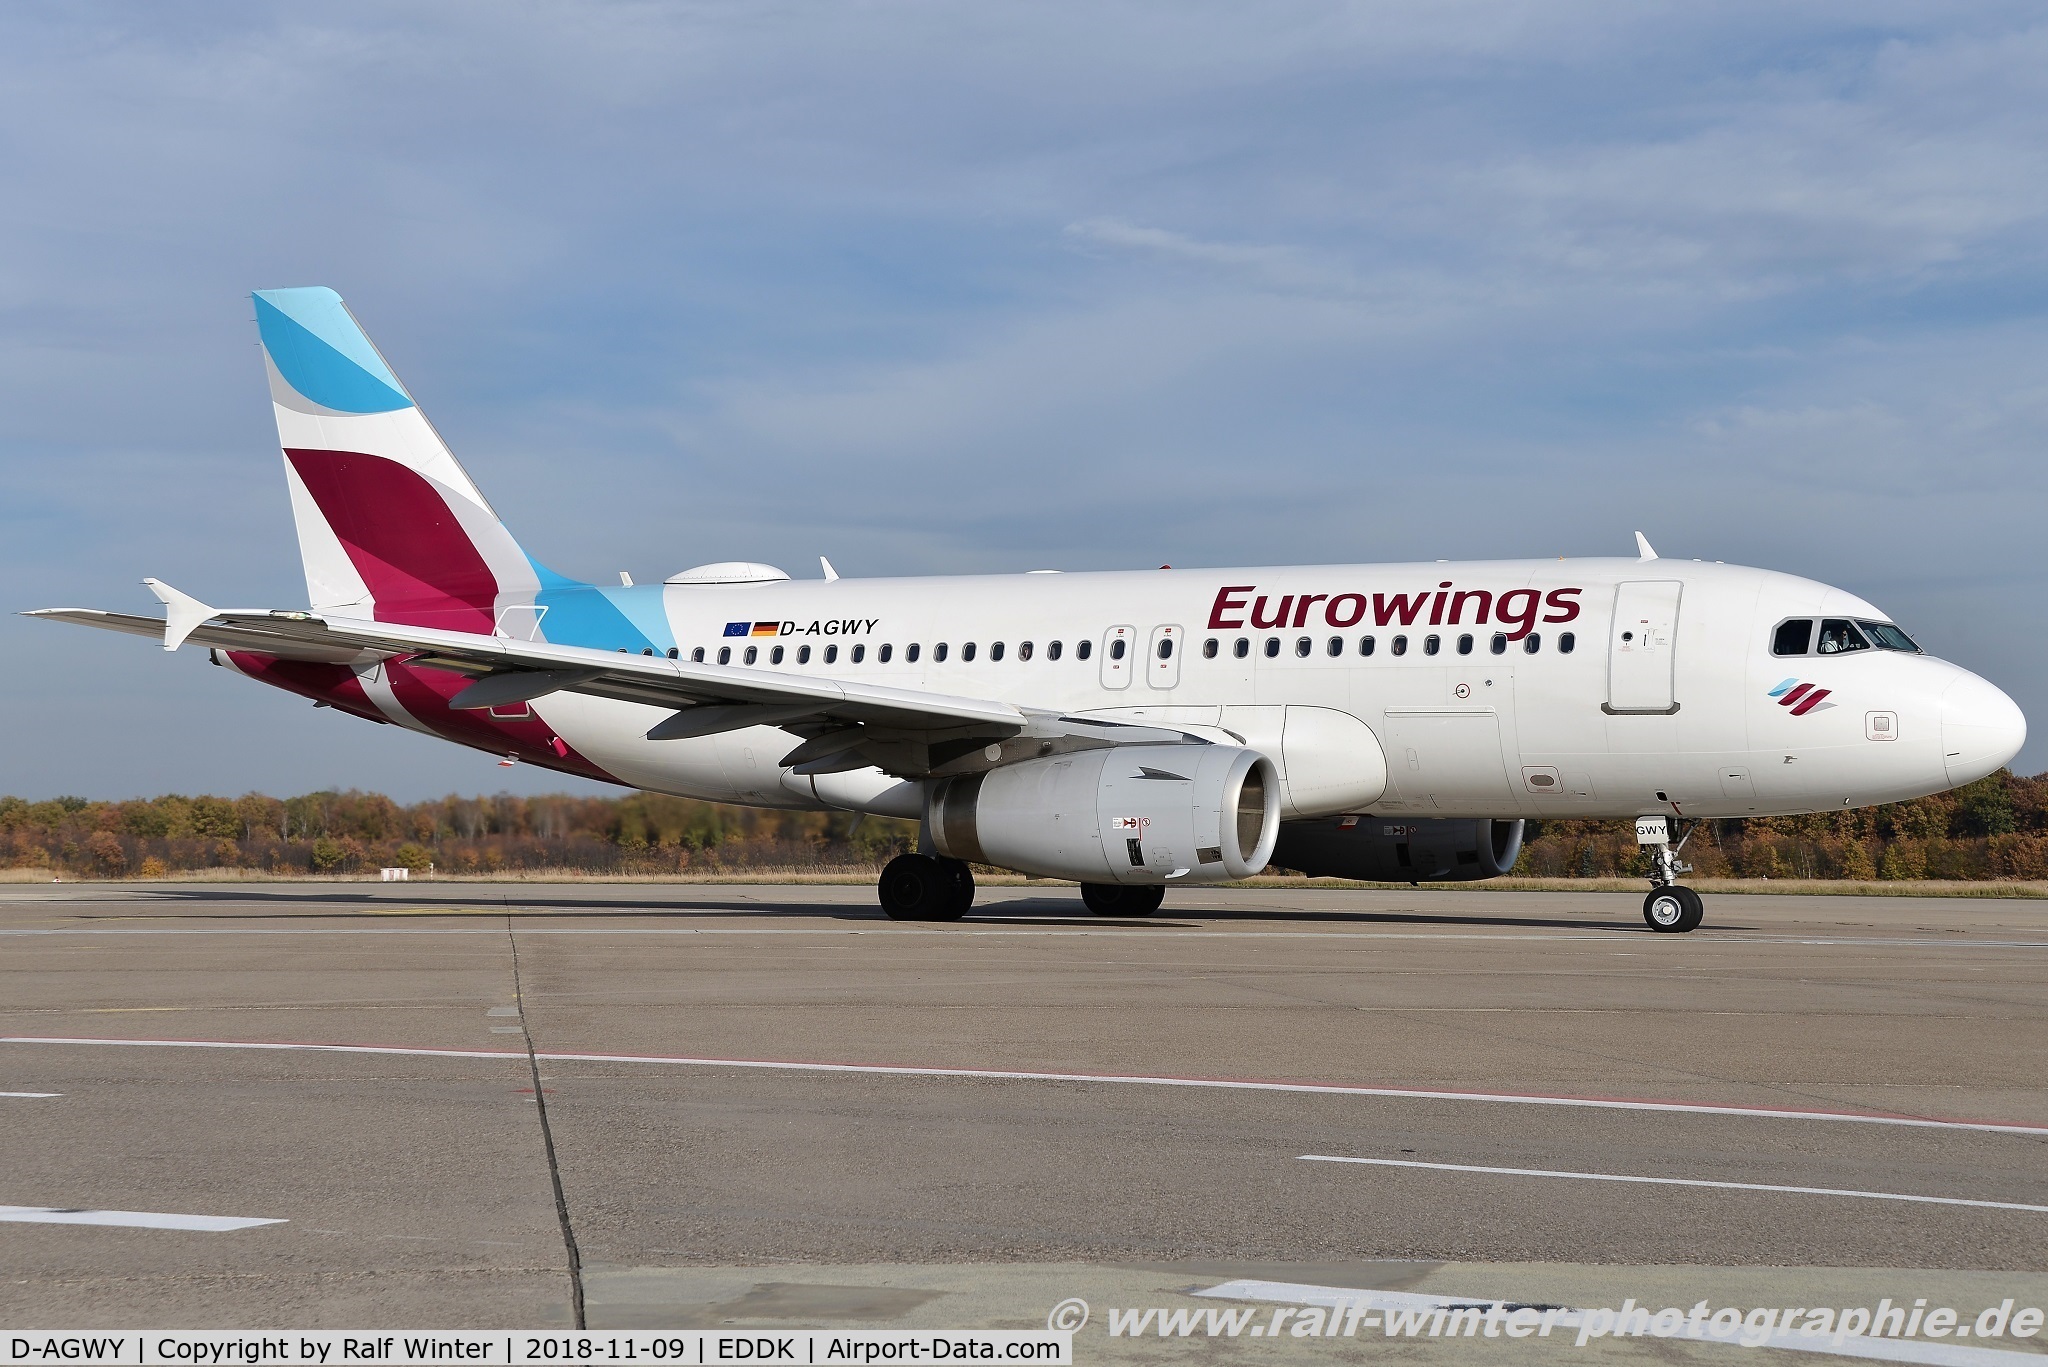 D-AGWY, 2013 Airbus A319-132 C/N 5941, Airbus A319-132 - EW EWG Eurowings opby Germanwings - 5941 - D-AGWY - 09.11.2018 - CGN